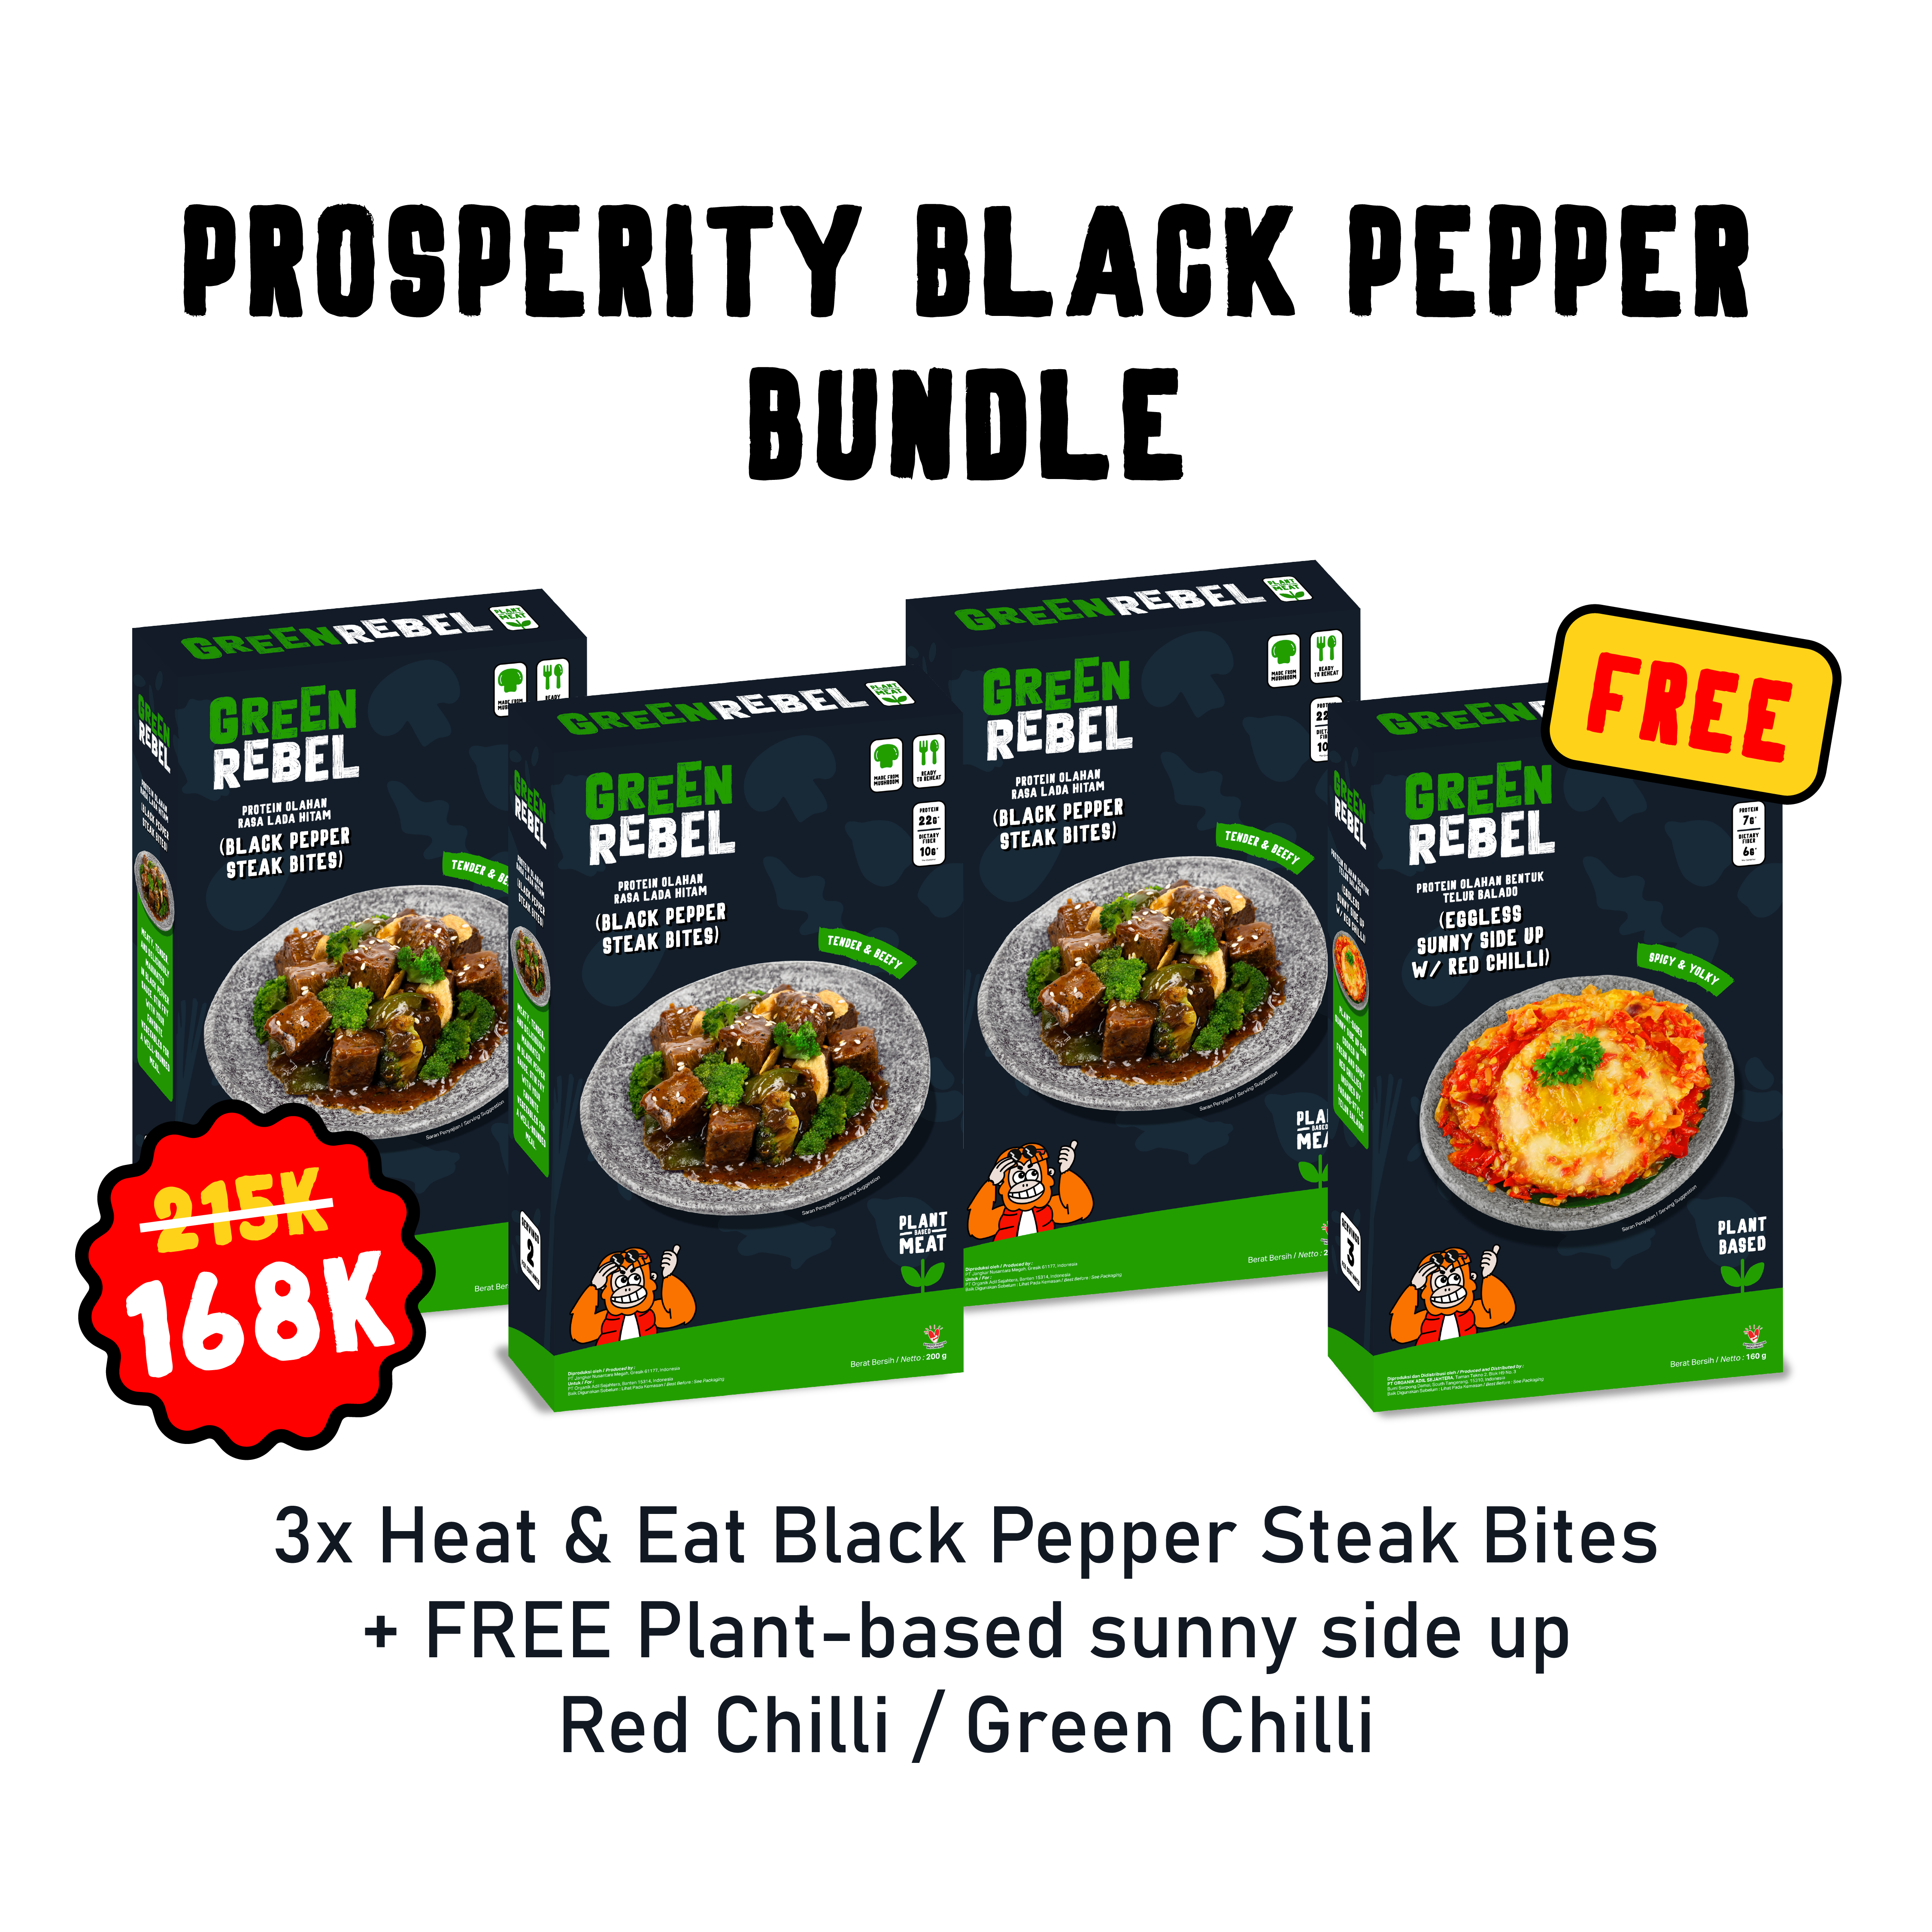 CNY Vegan Prosperity Black Pepper Bundling